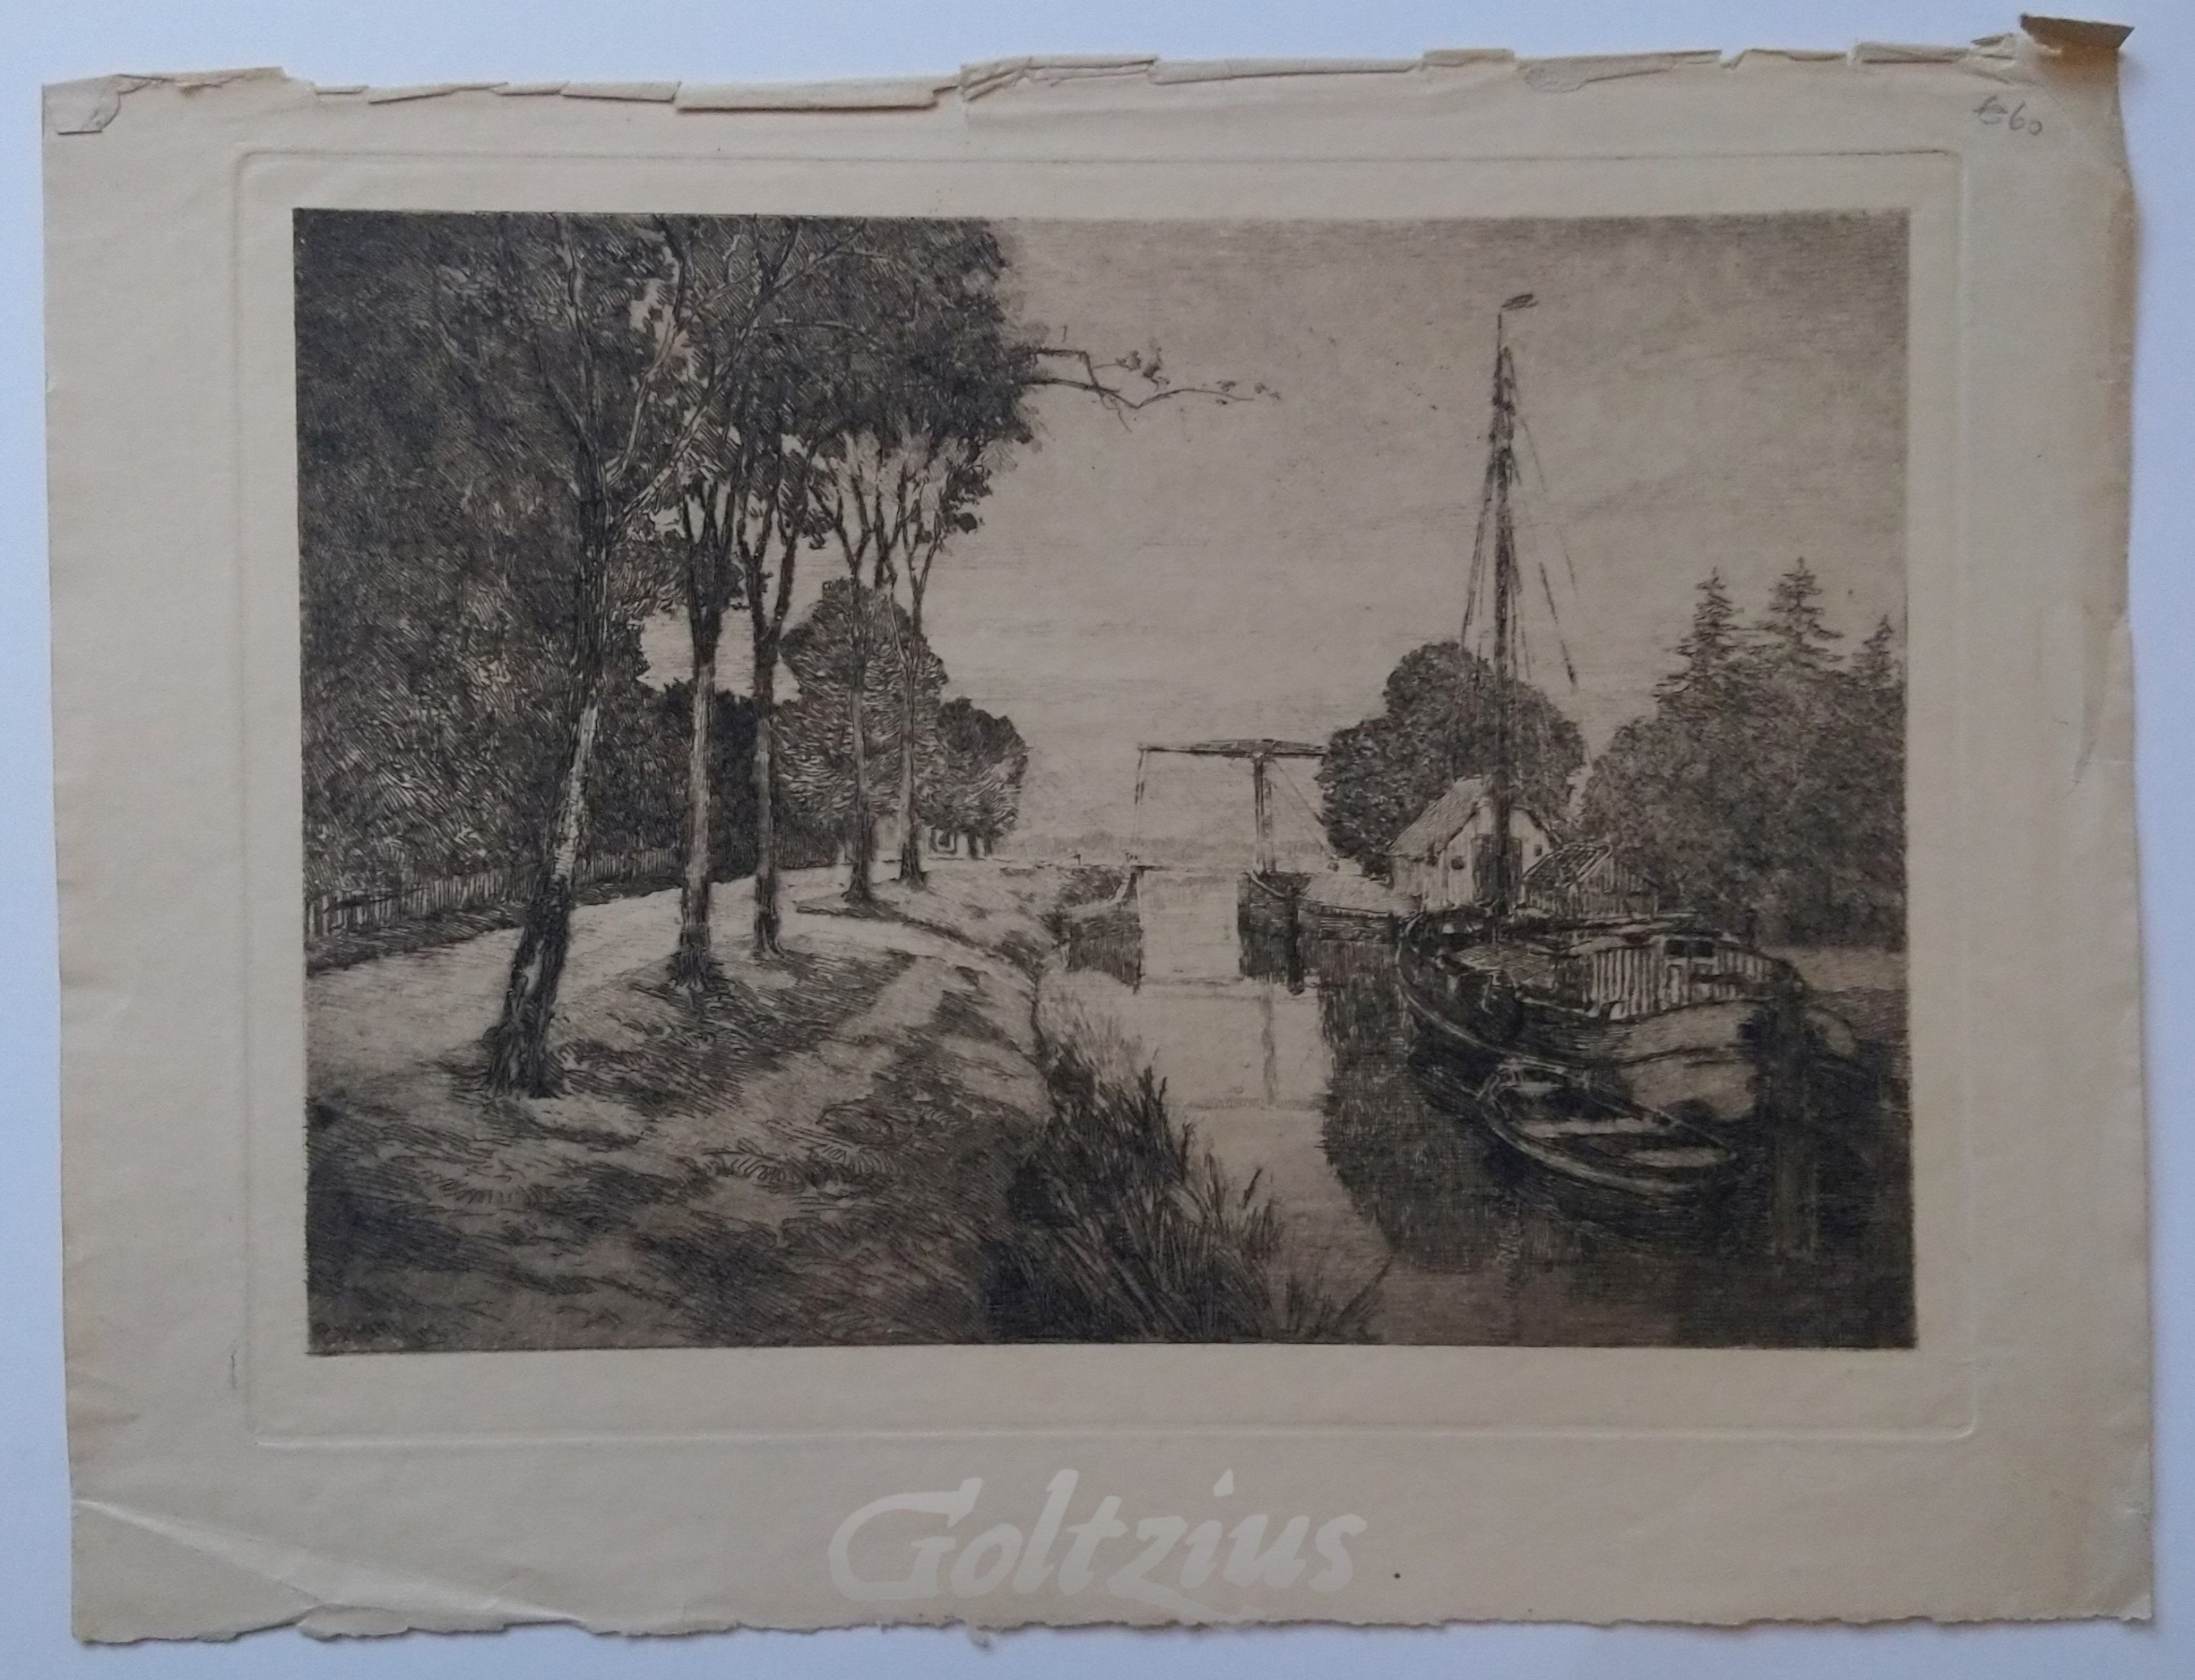 MATTHES, OSKAR PAUL, Landscape with a moored sailboat near a drawbridge